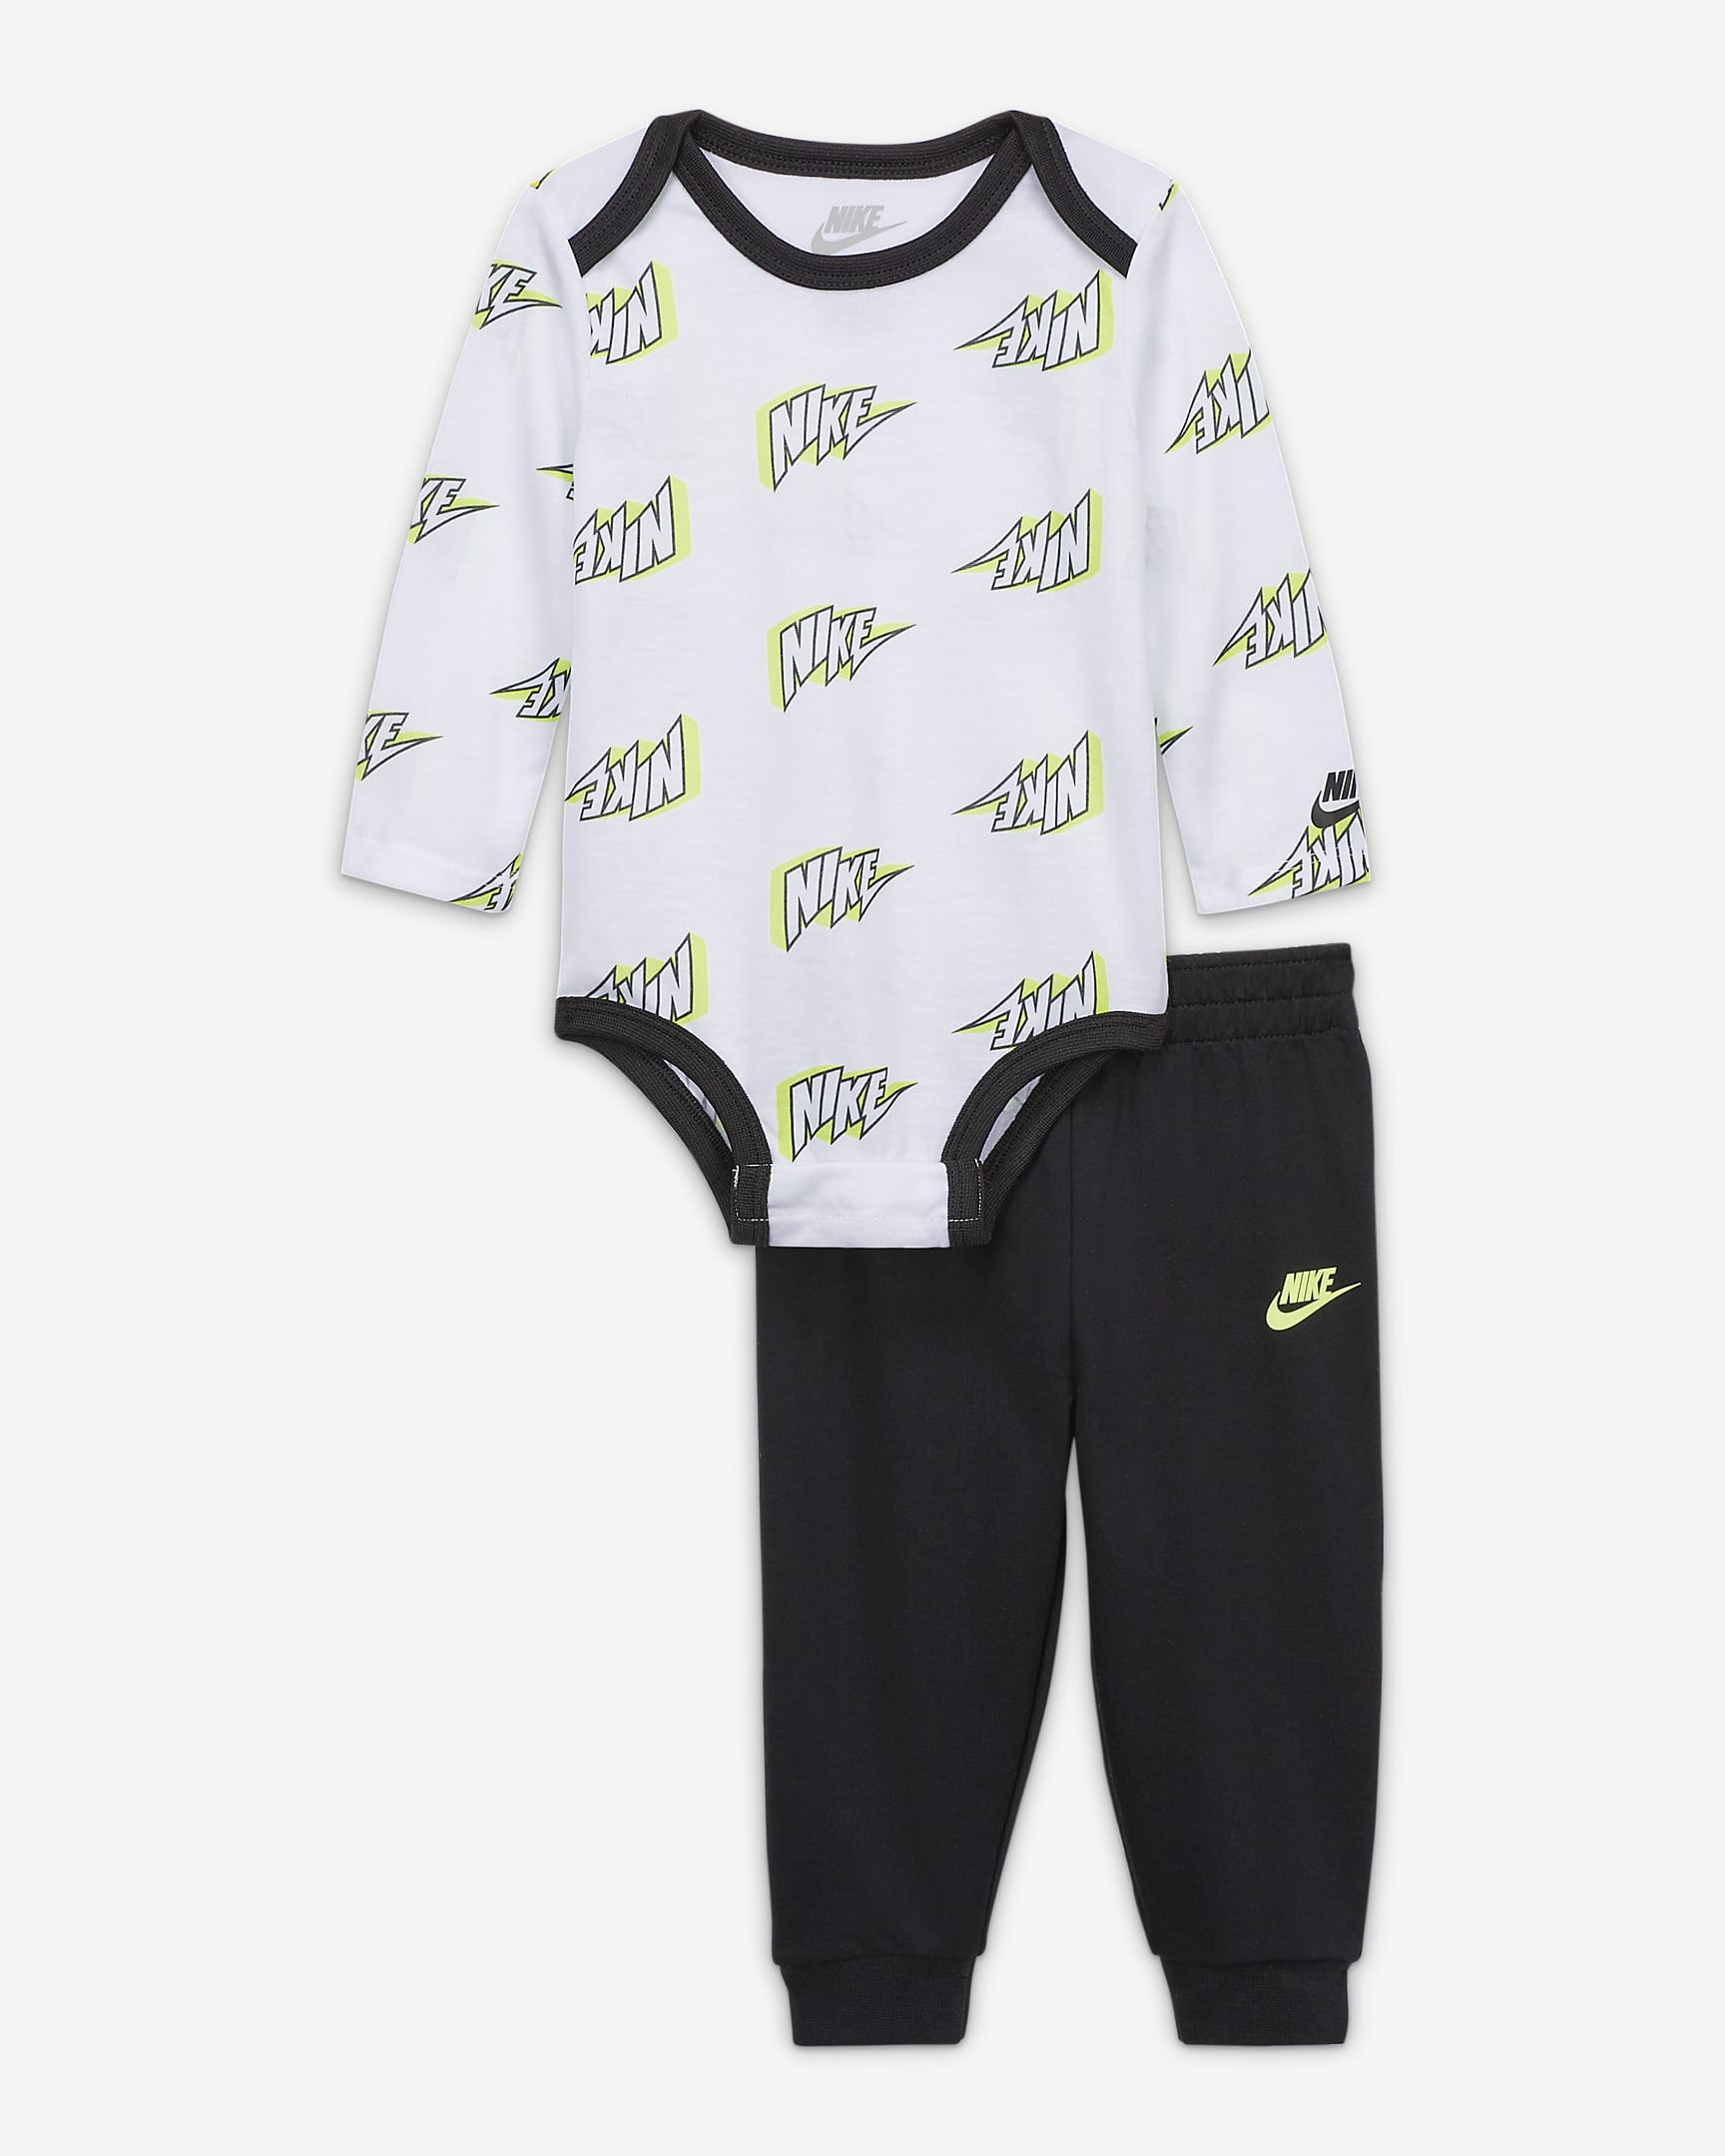 Nike Baby (0-9M) Bodysuit and Pants Set. Nike.com